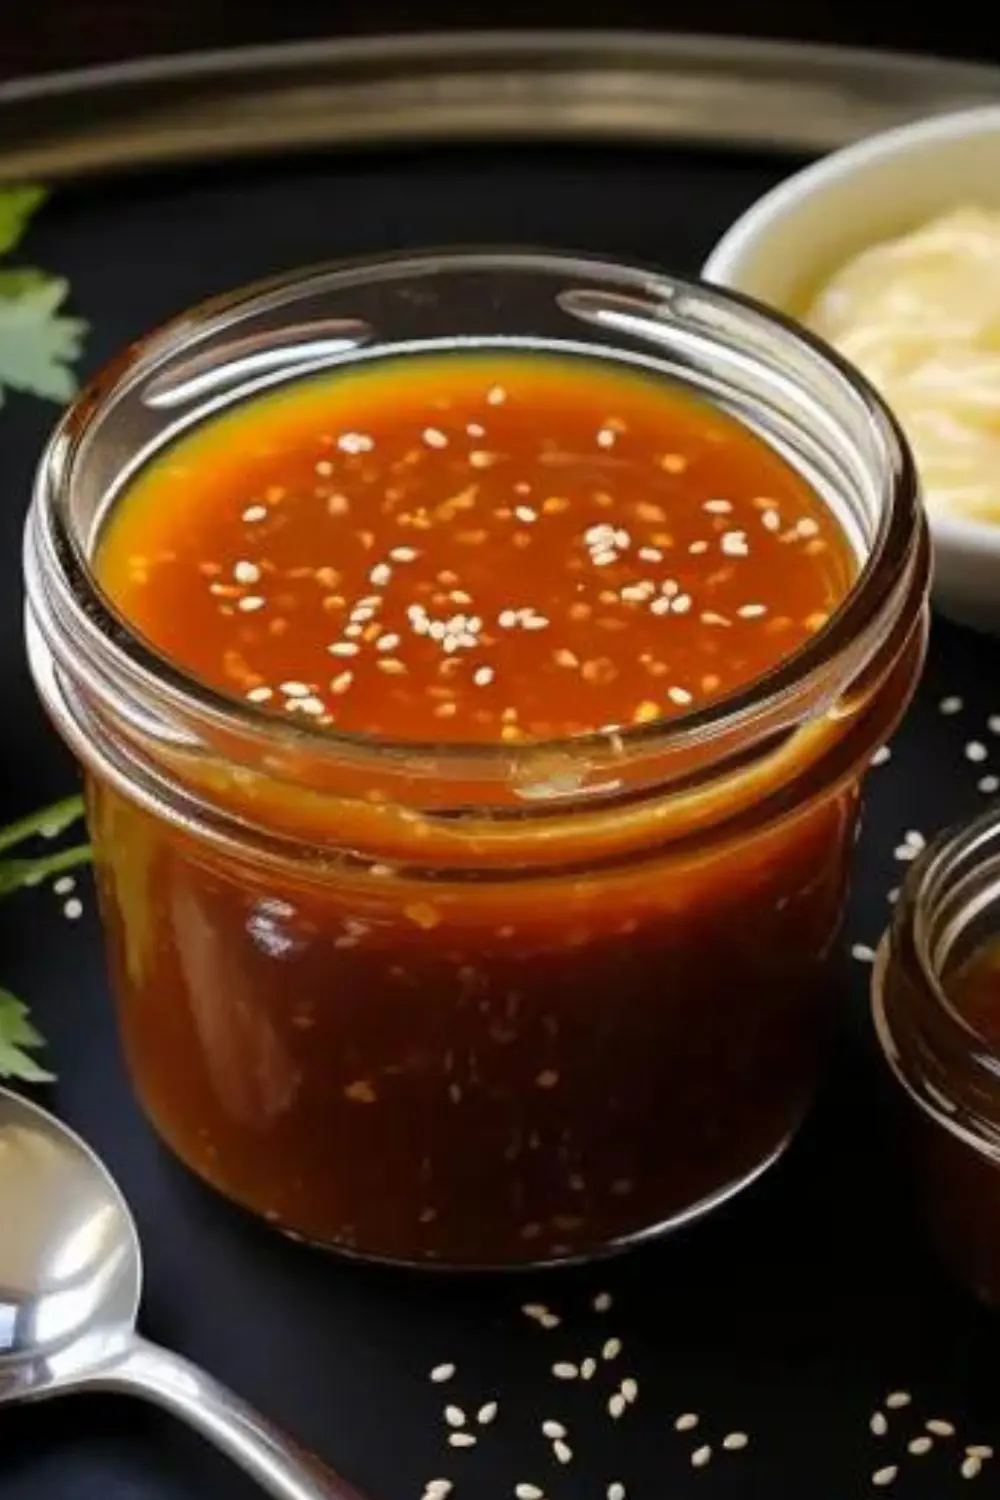 Cheddar Honey Hot Sauce Recipe